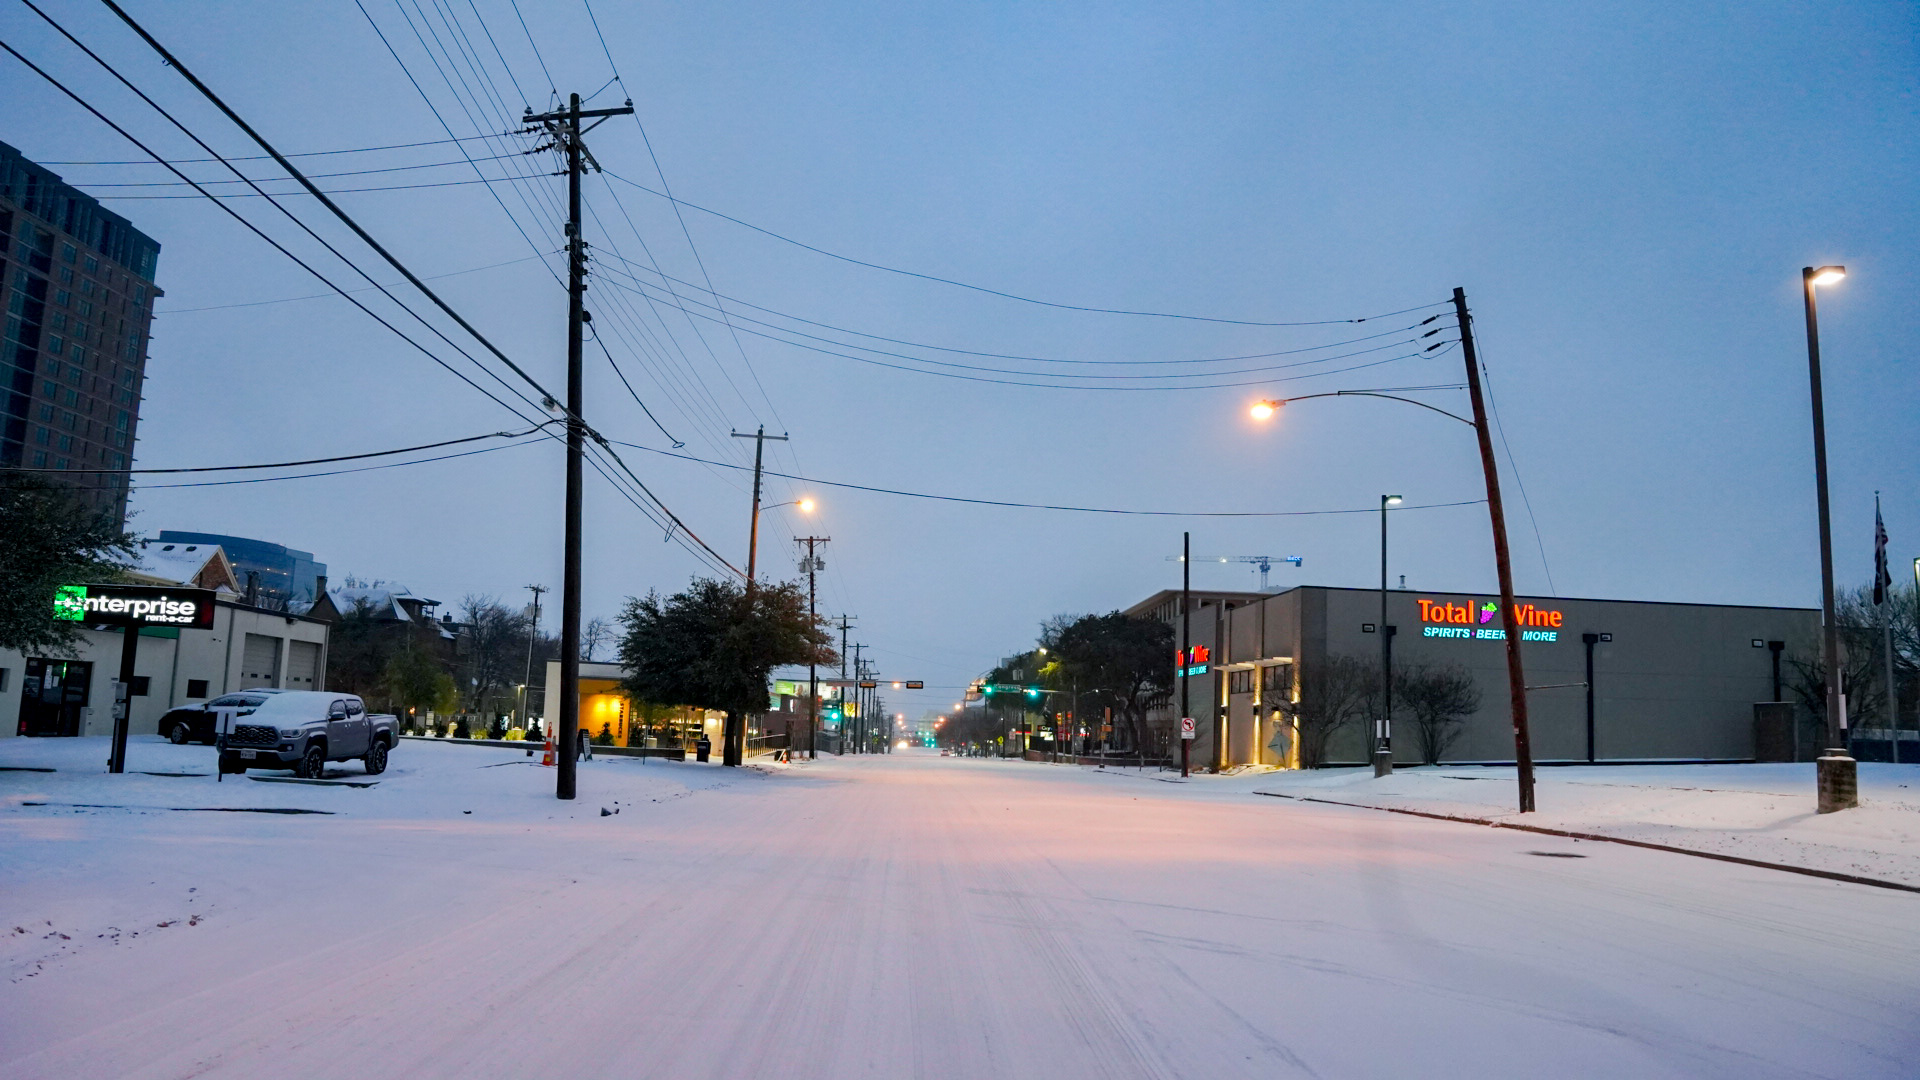 Oak Lawn Dallas during the 2021 winter storm.